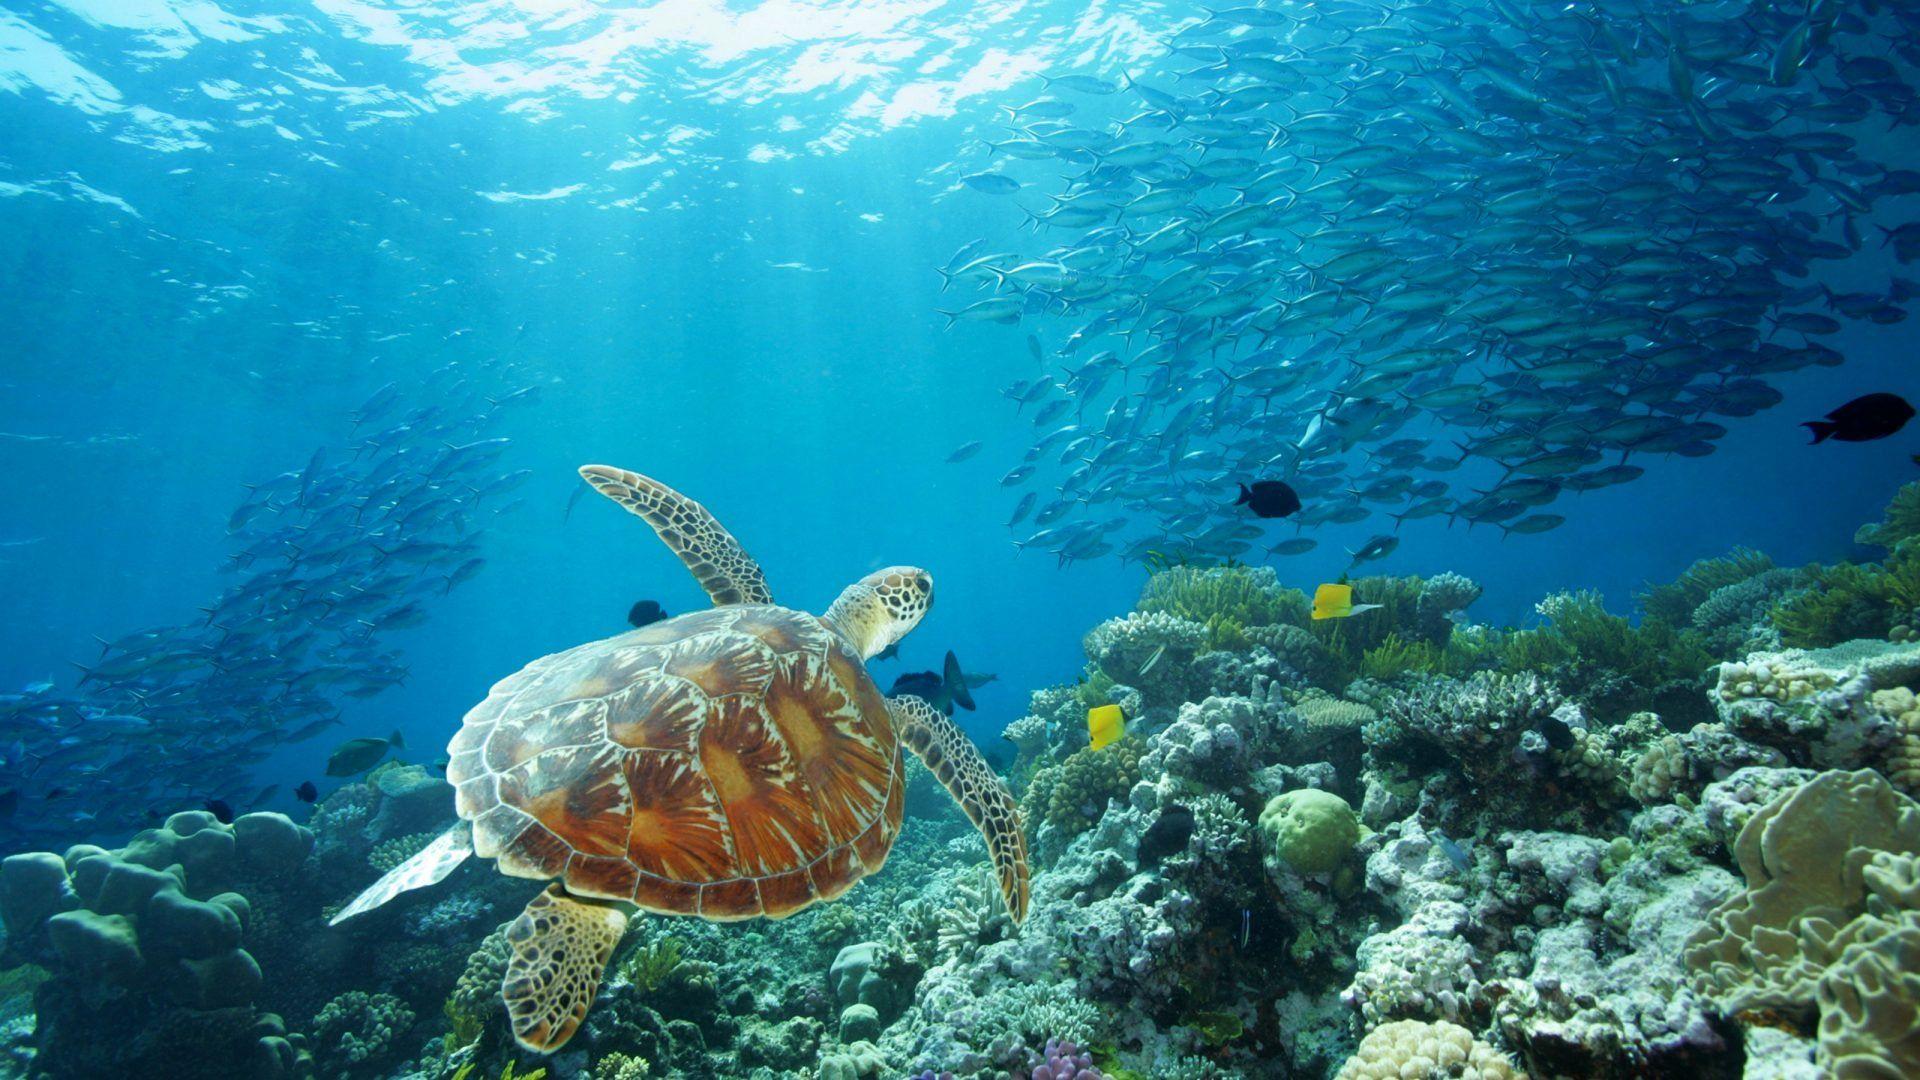 A sea turtle swims upward towards a school of fish.